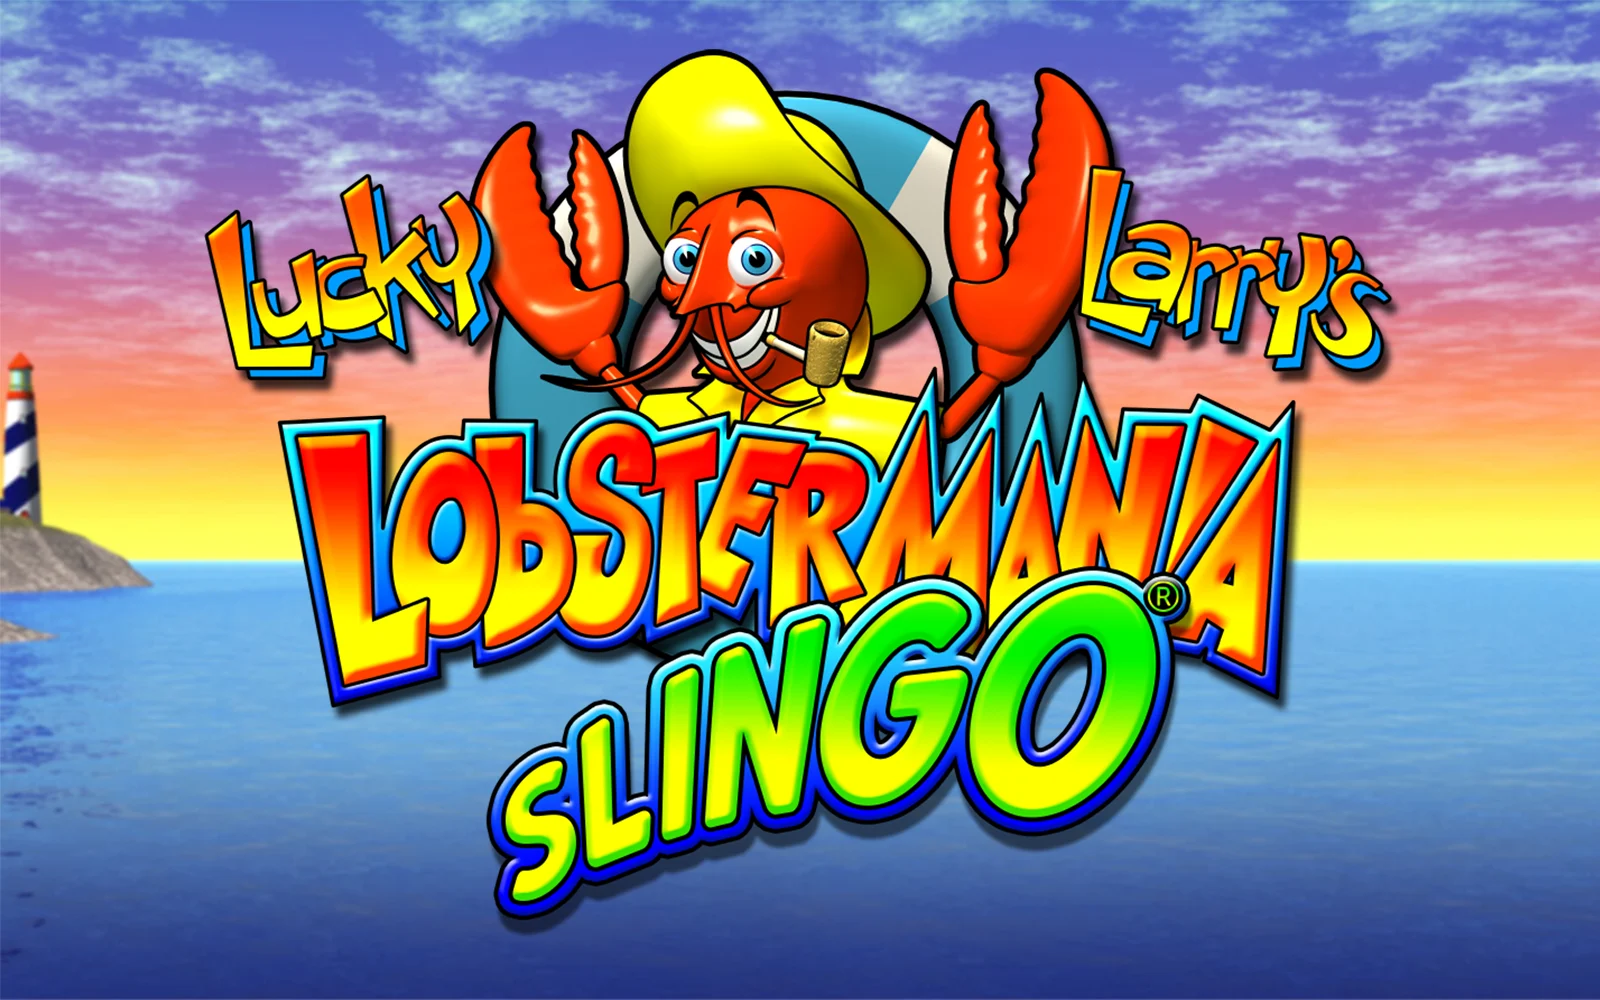 Play Lucky Larry's Lobstermania Slingo on Starcasino.be online casino